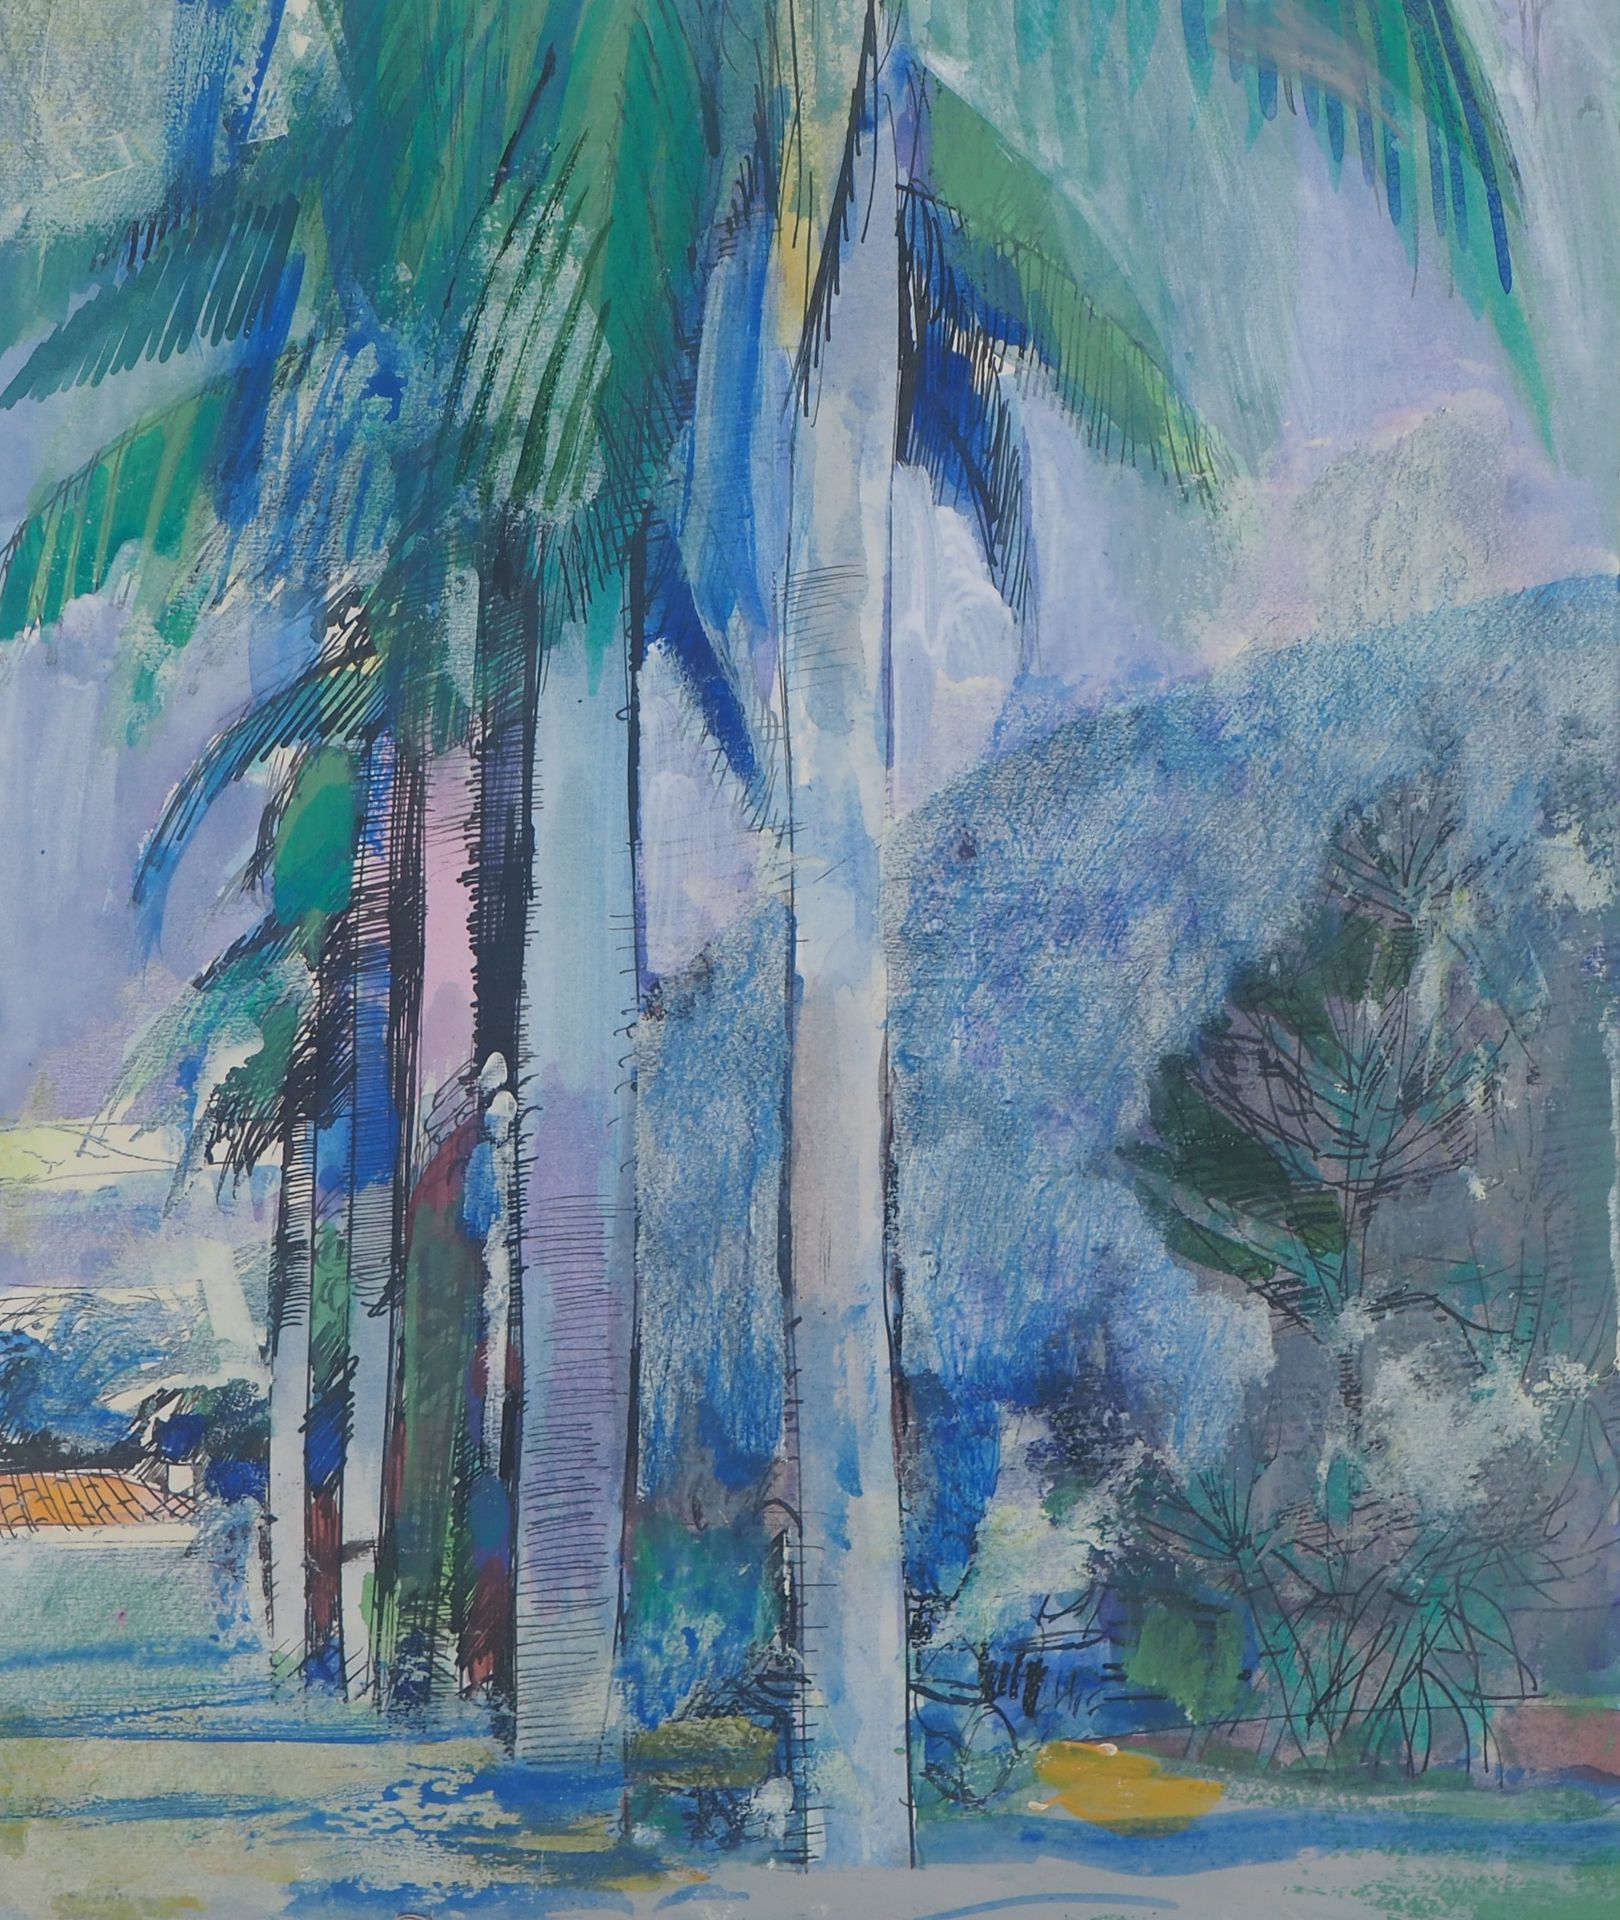 Maurice GENIS 莫里斯-吉尼斯

棕榈树小巷

原始水彩画

纸上 31 x 26 cm

状况极佳





运费将是21欧元TTC比利时和法国/&hellip;